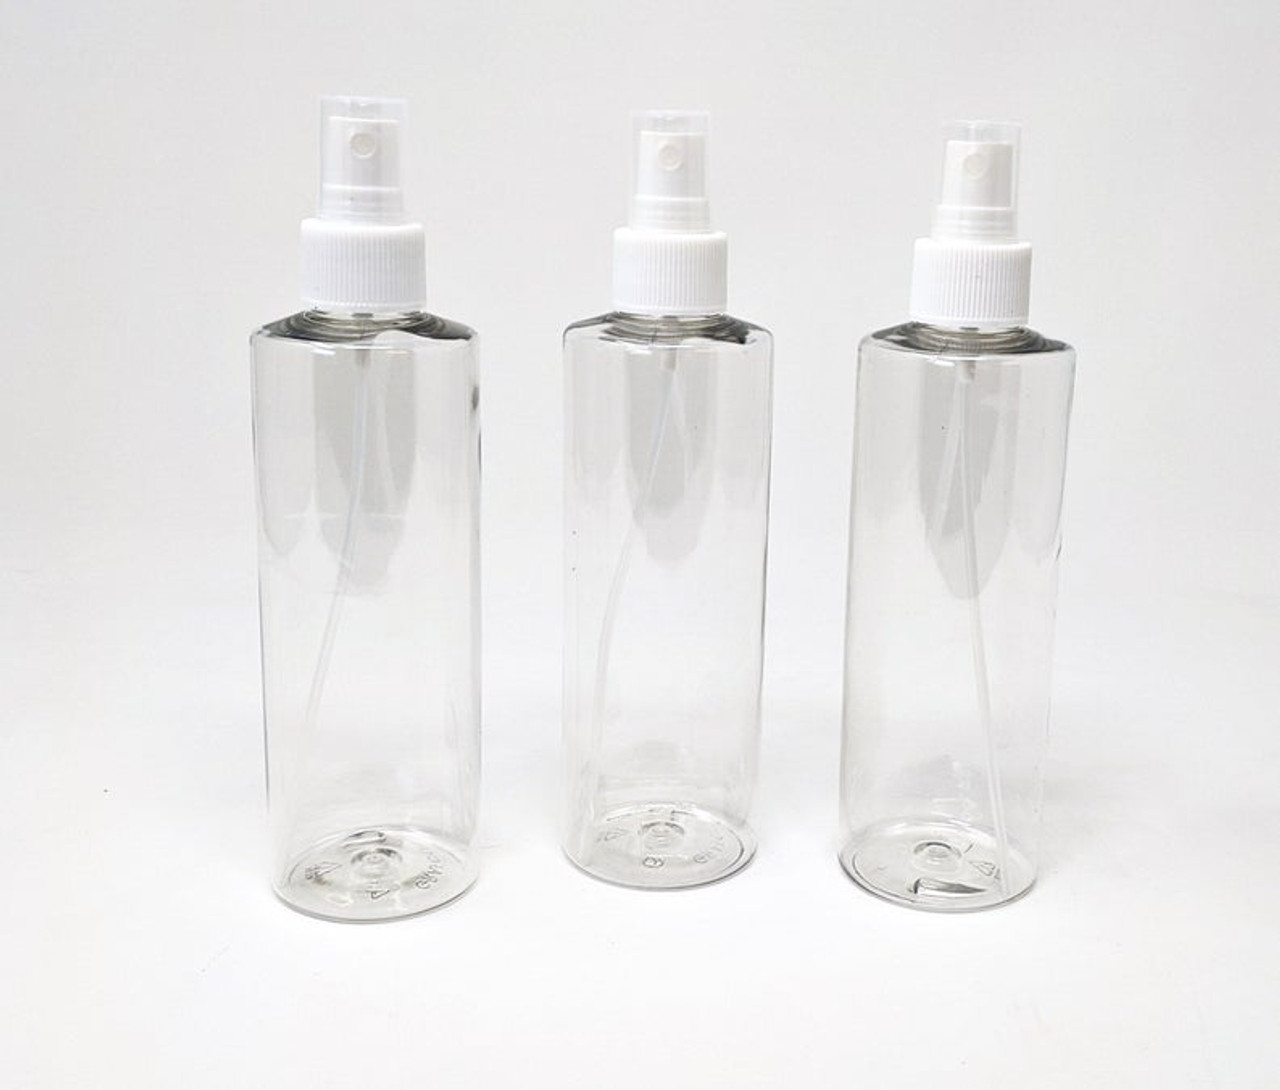 Clear Spray Bottle 16 OZ